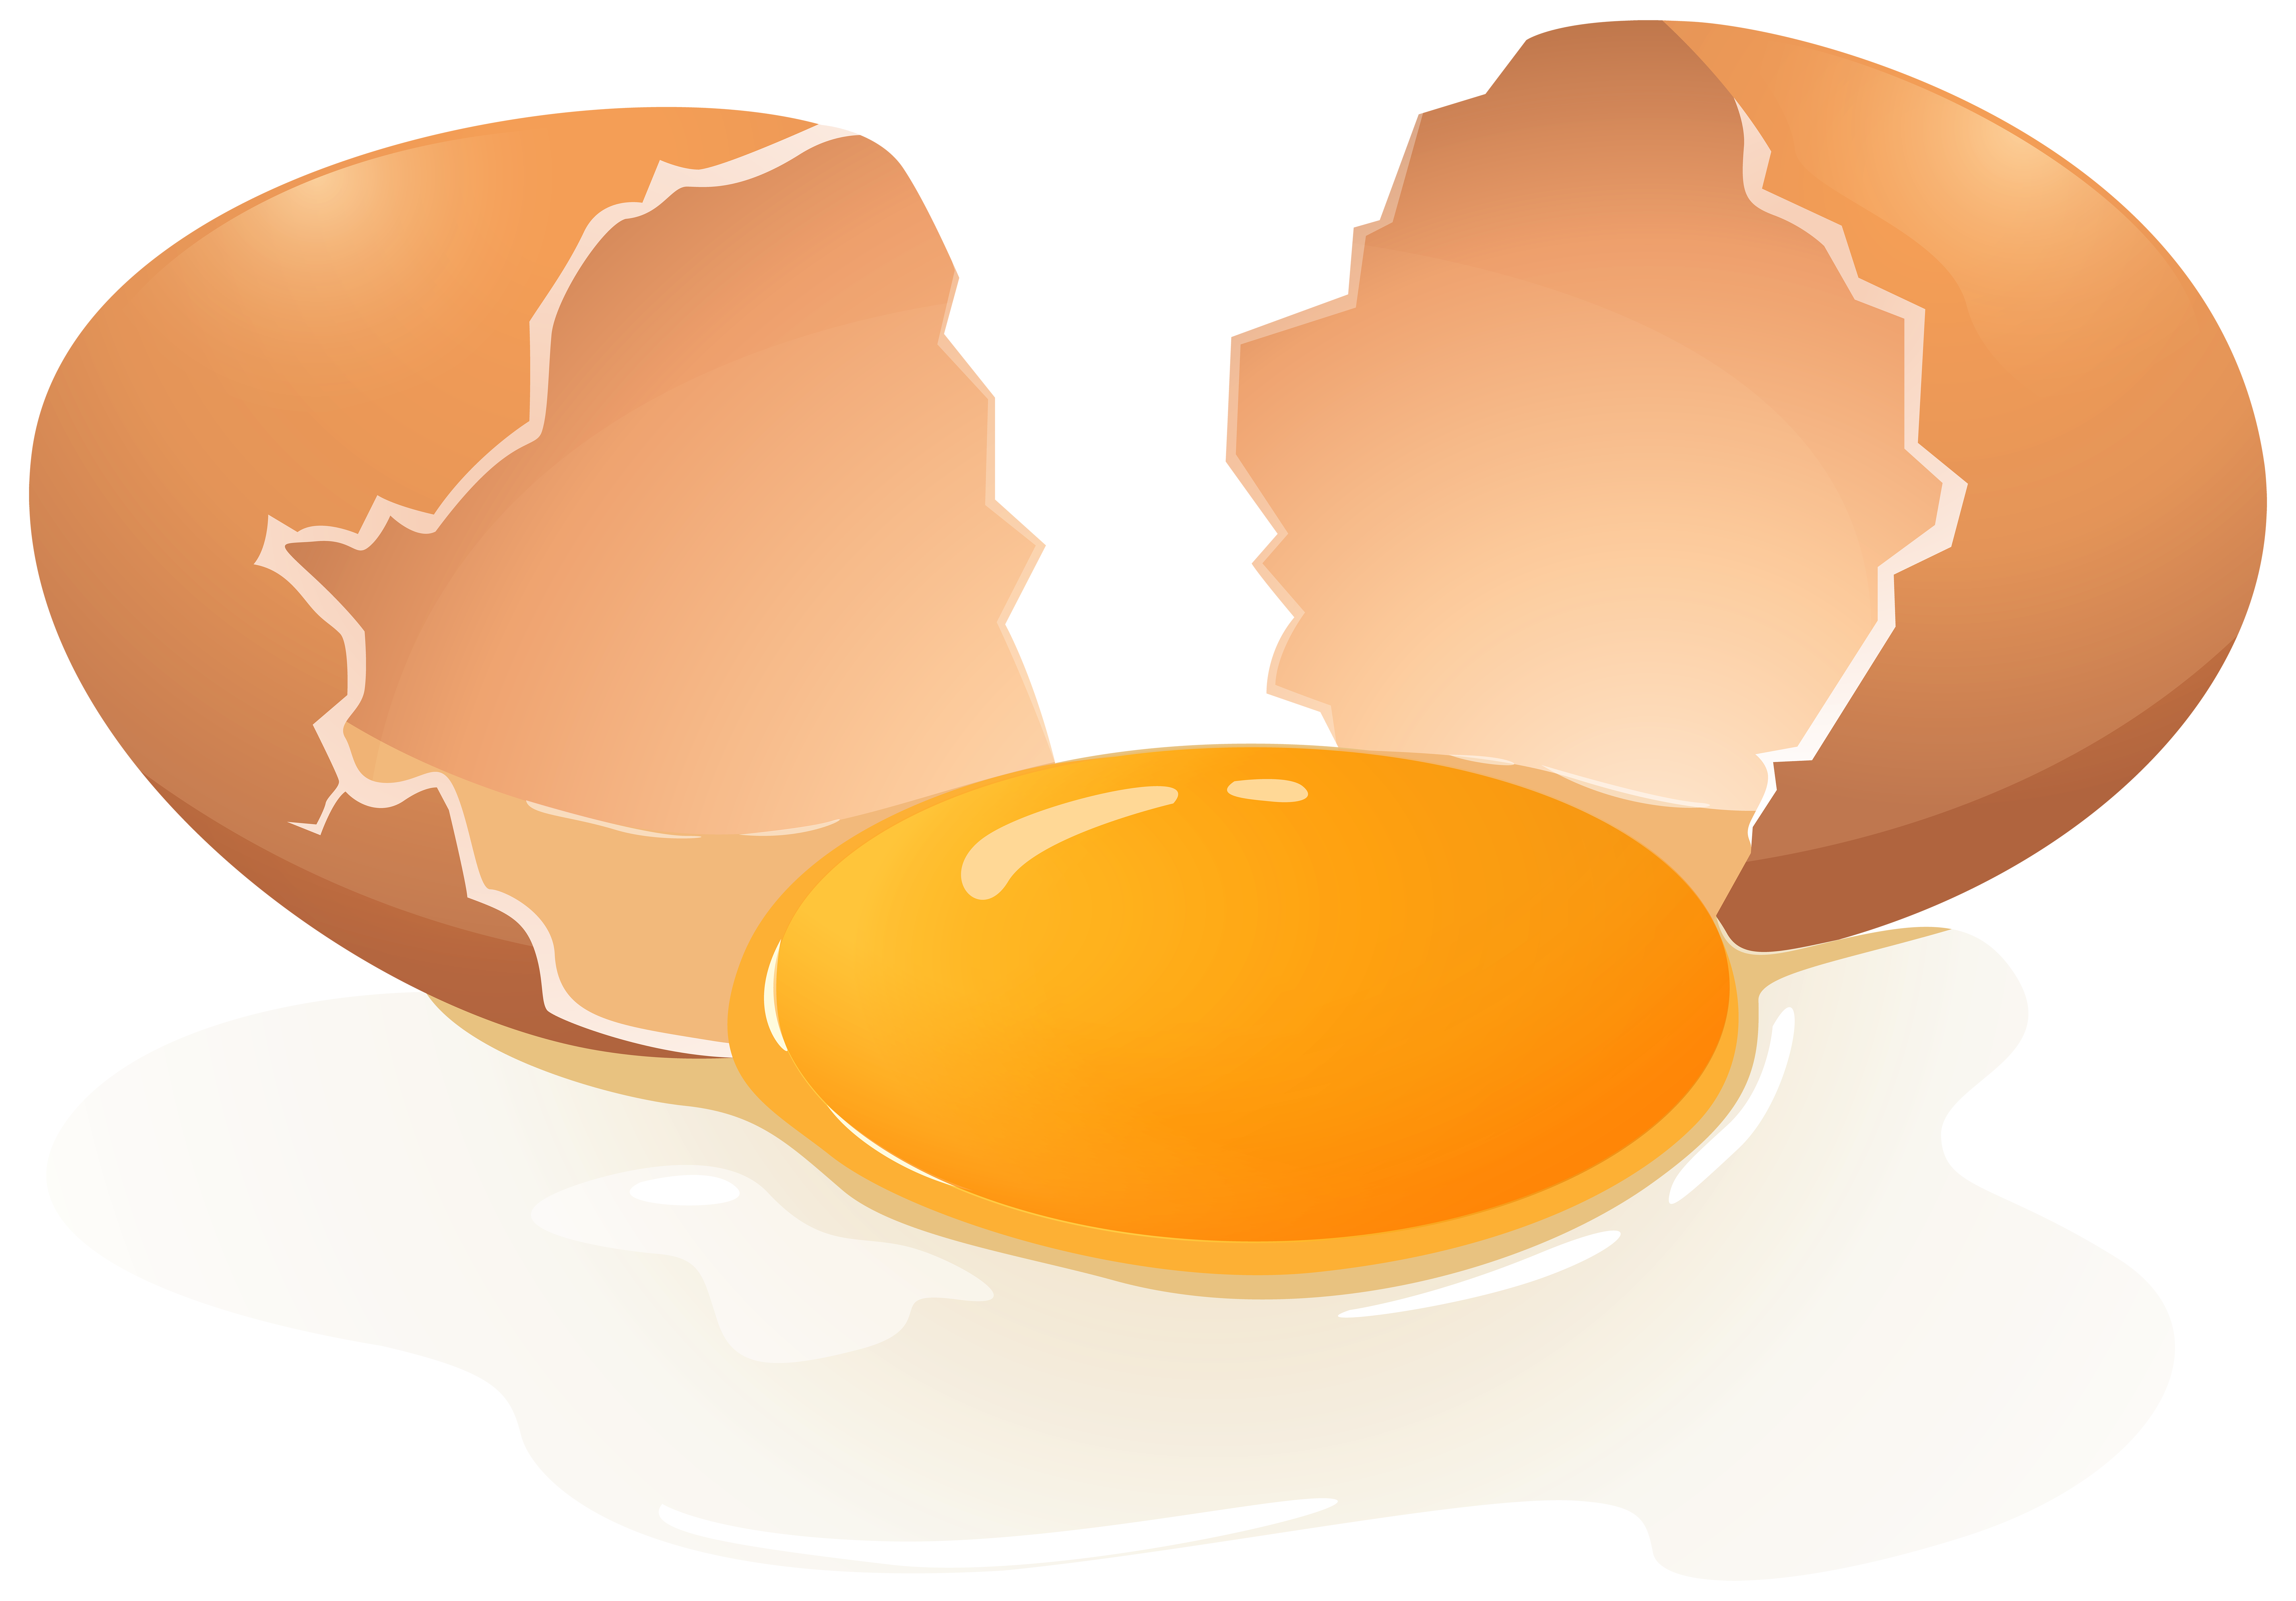 Egg png images